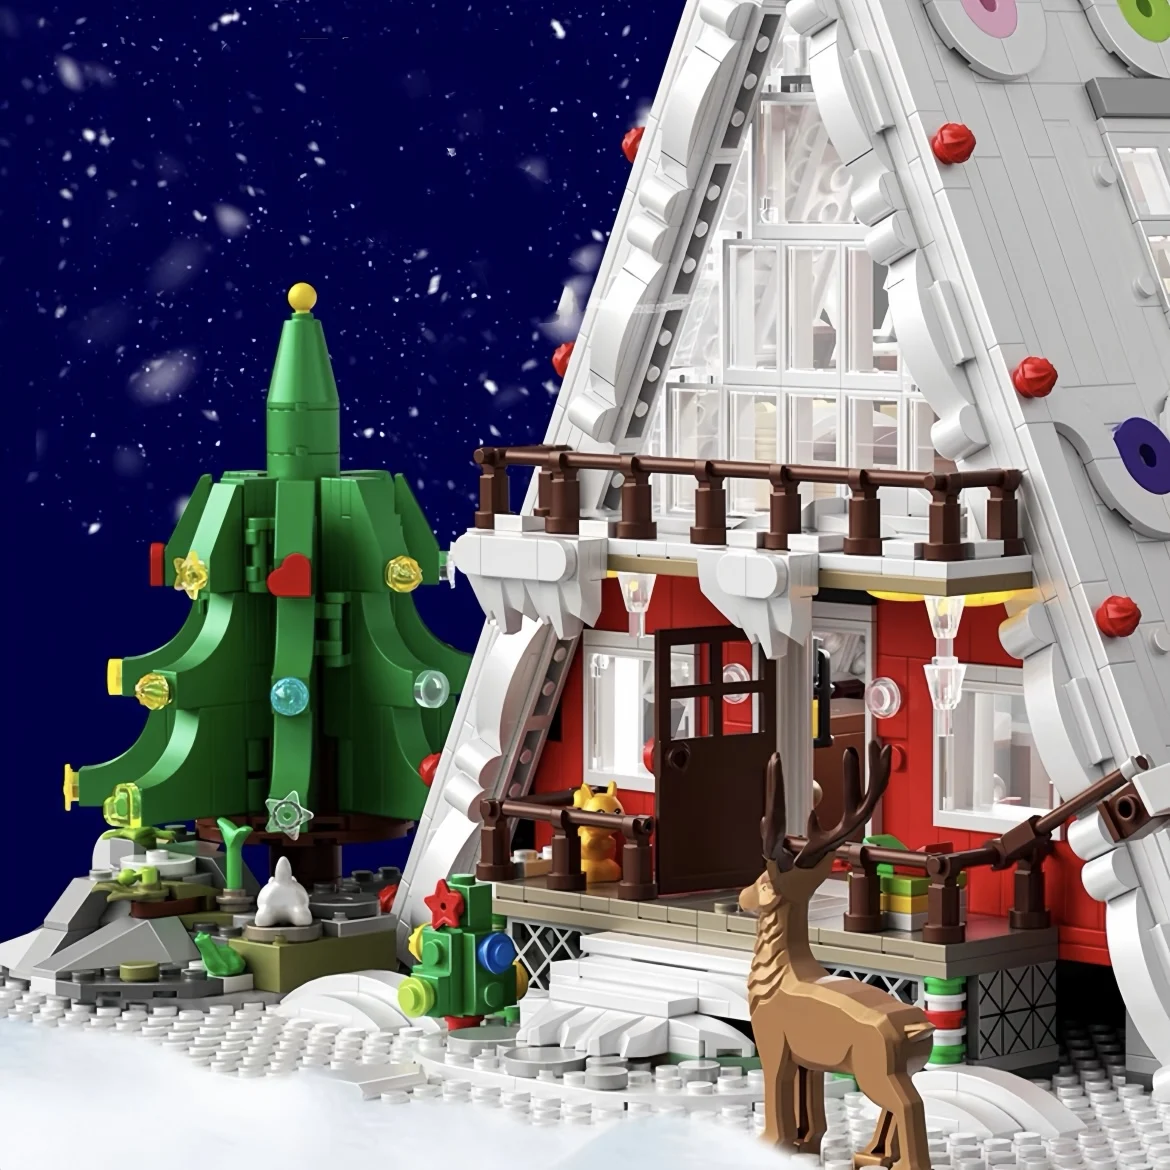 

2023 City Creativity Winter Village Fantasy Christmas Cabin Mini Building Blocks Bricks Bricks Toys For Kids 2159 pieces